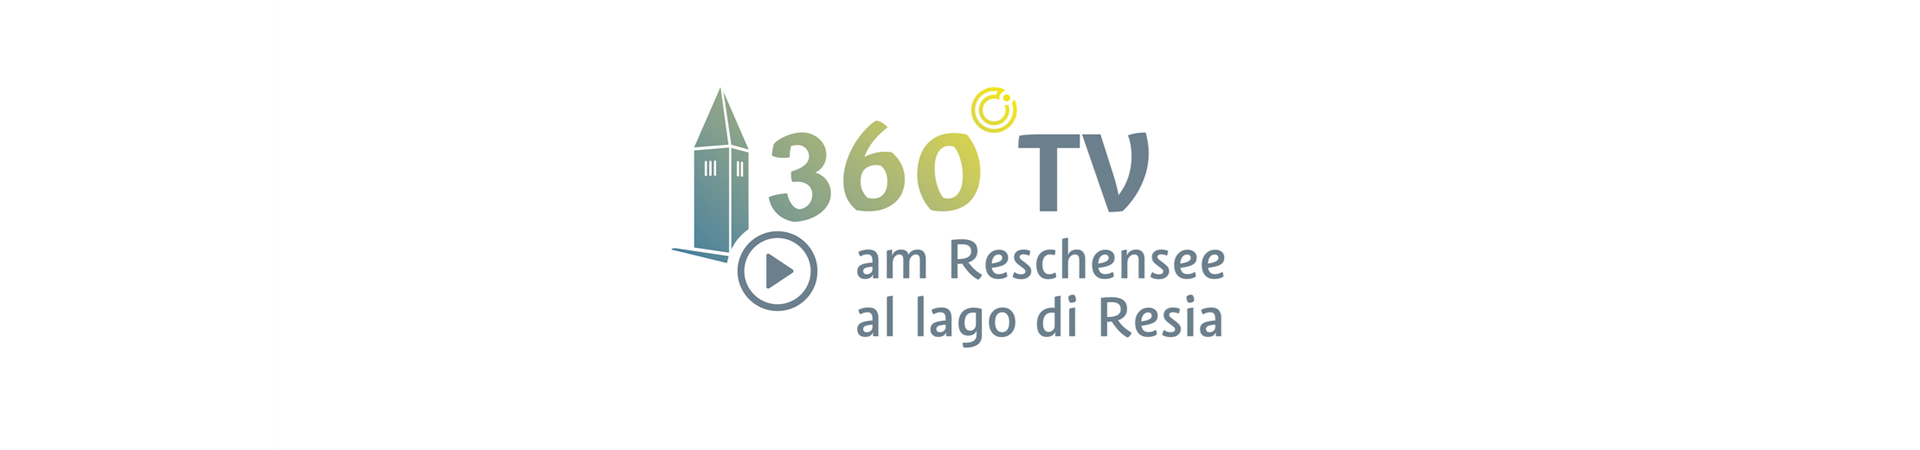 360-tv-banner